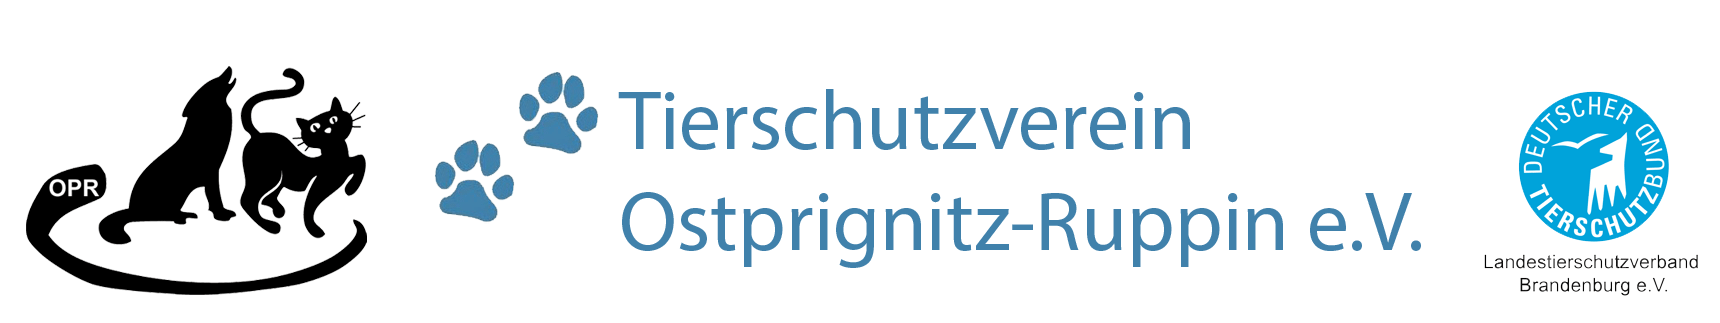 Tierschutzverein Ostprignitz-Ruppin e.V.